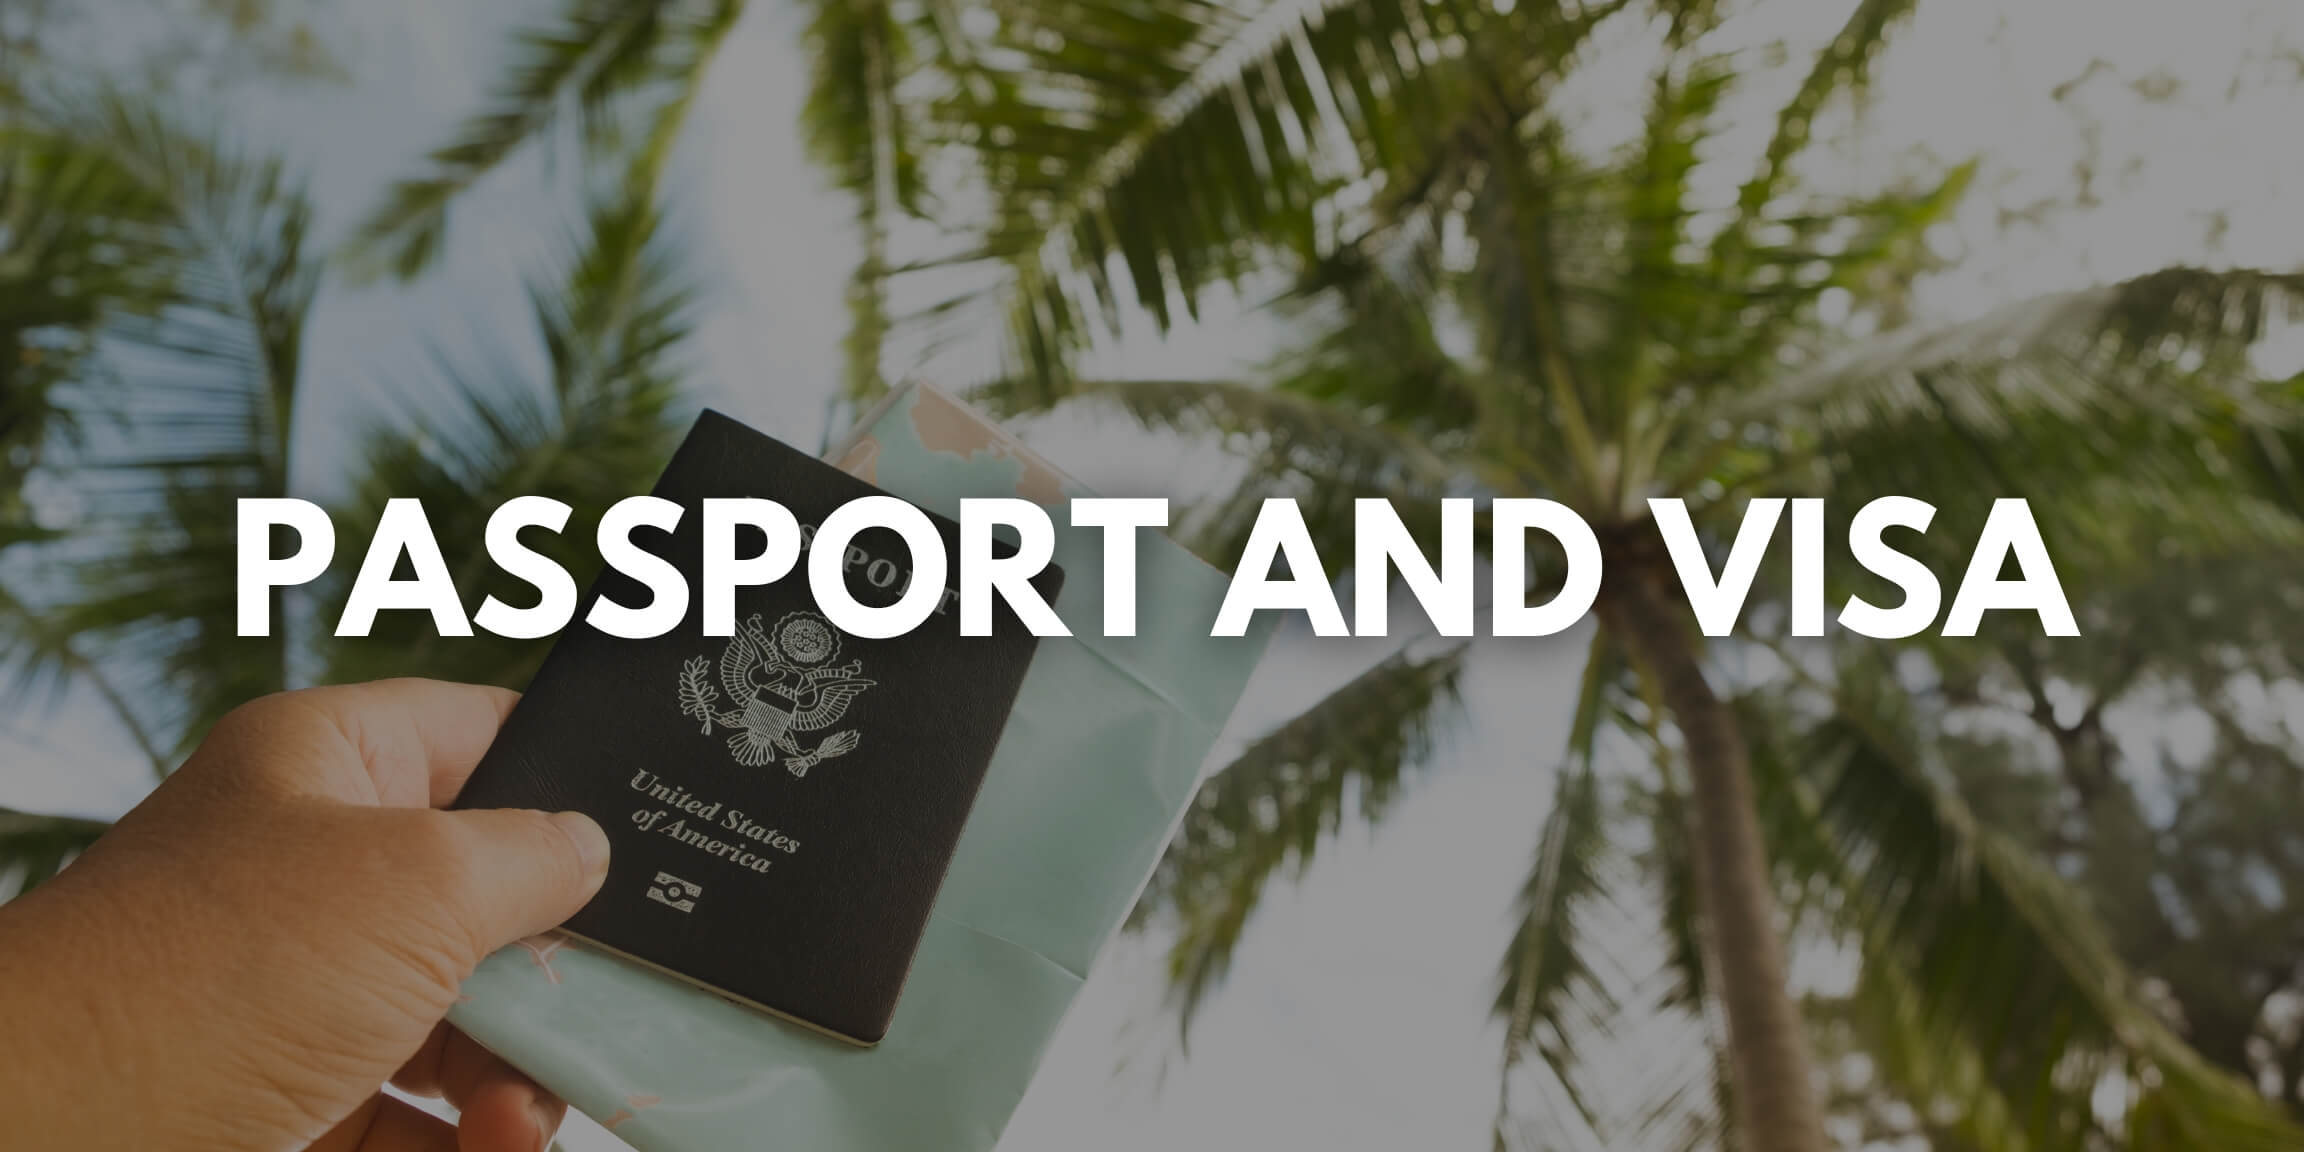 Dallas Travel Agency Passport and Visa